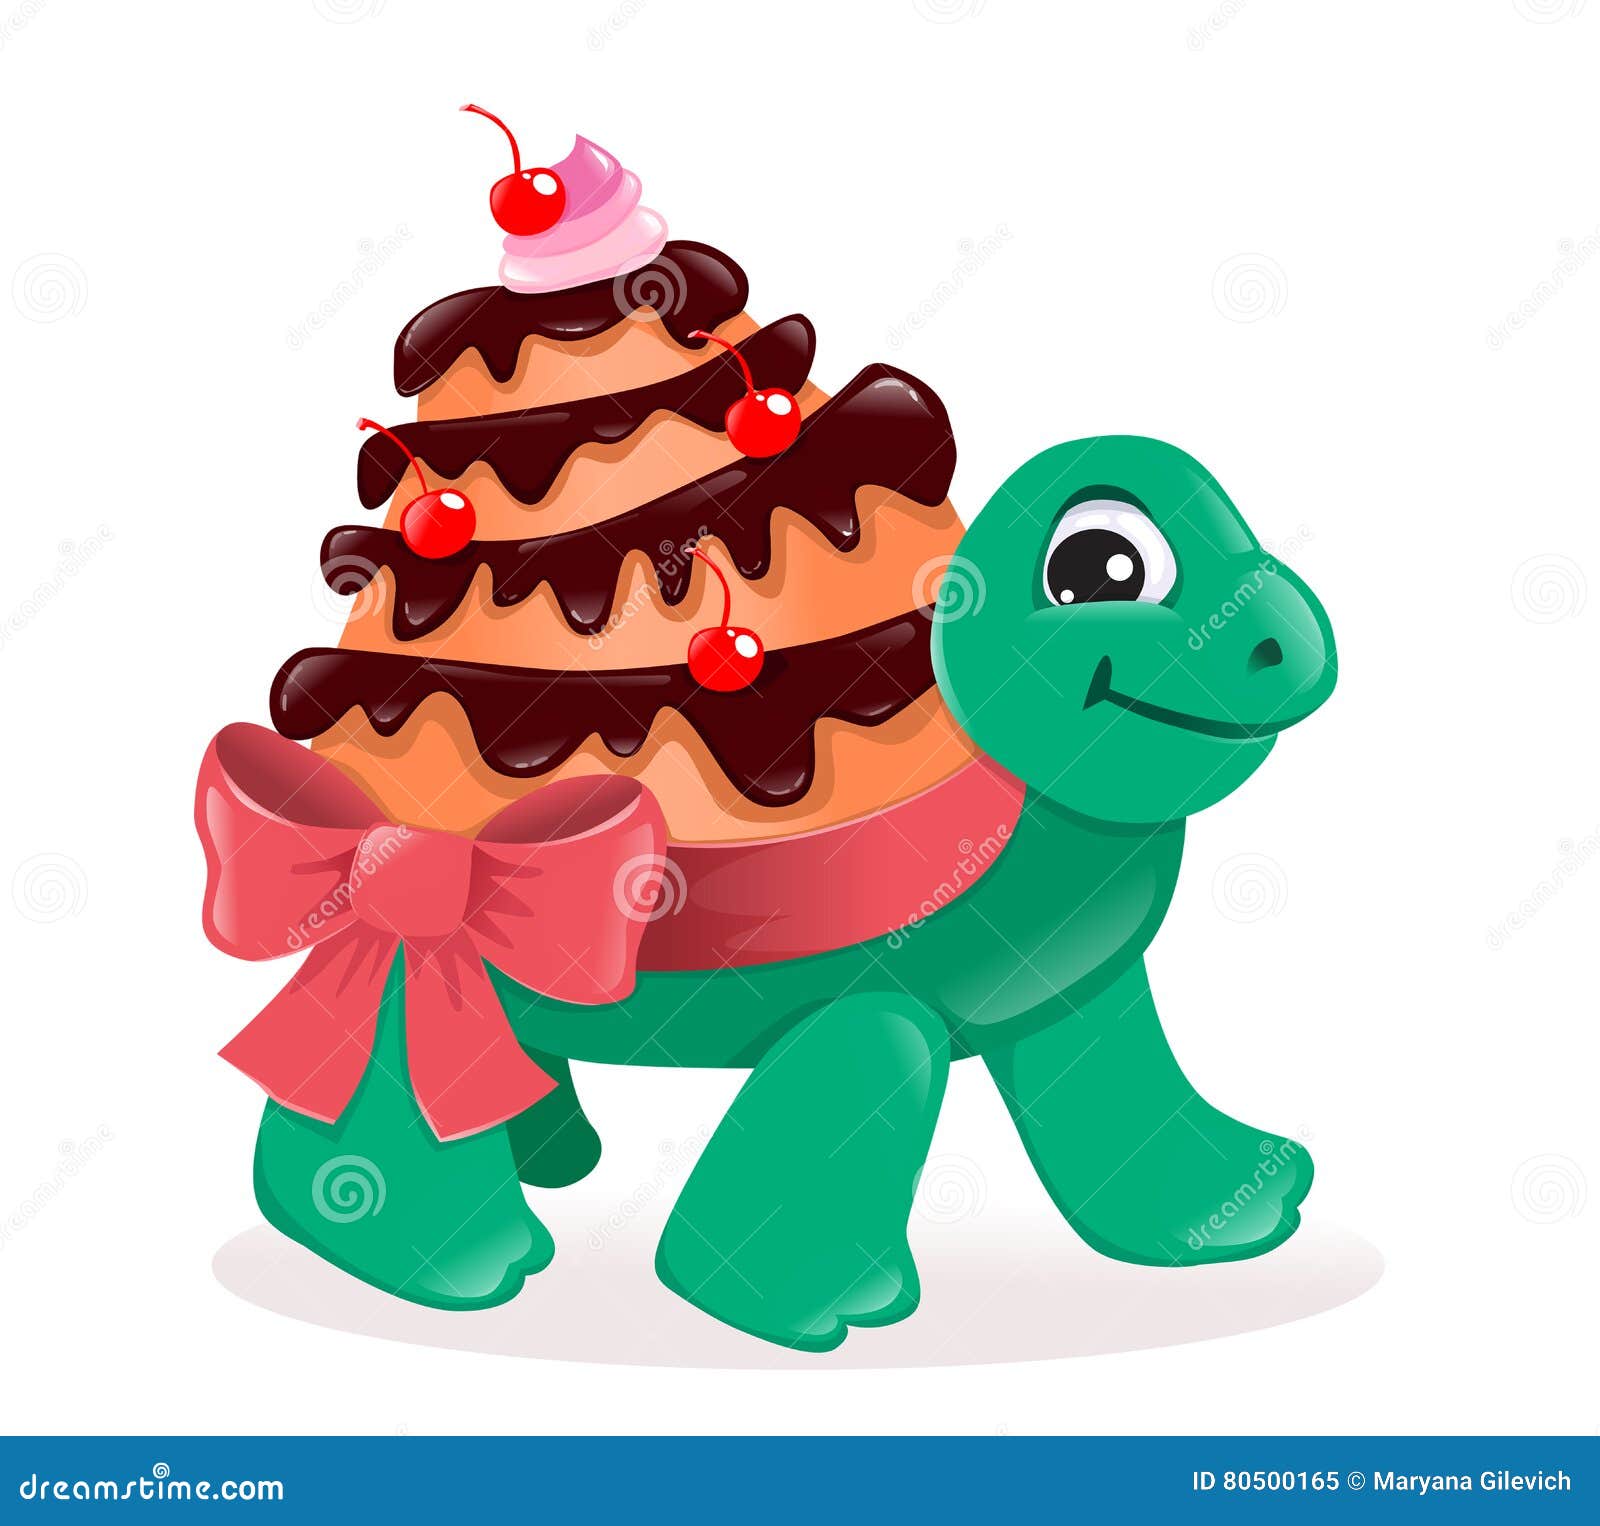 Turtle cake stock vector. Illustration of birthday, background - 80500165